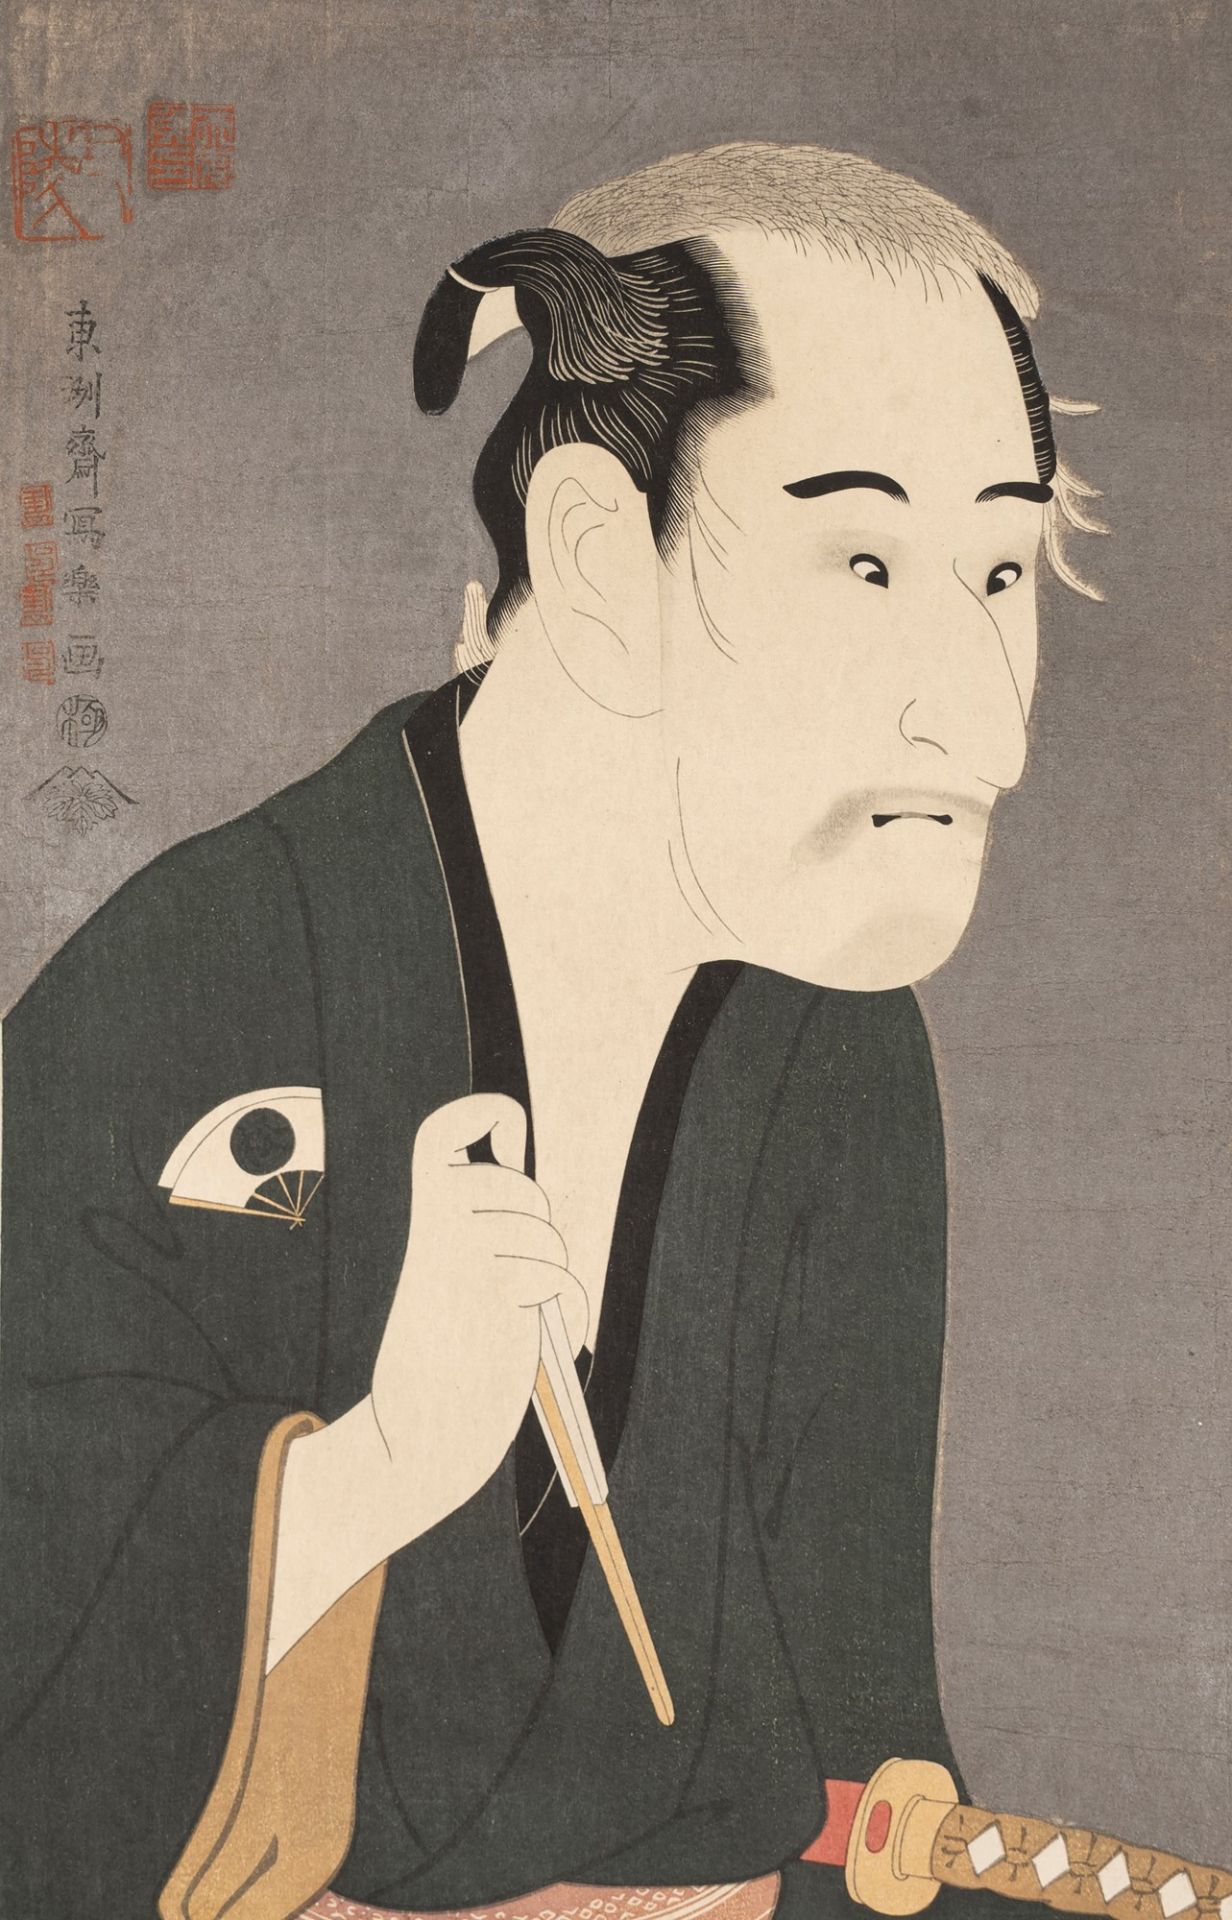 Sharaku - Five woodcuts representing theatrical masks, Japan, Taisho period - Image 3 of 5